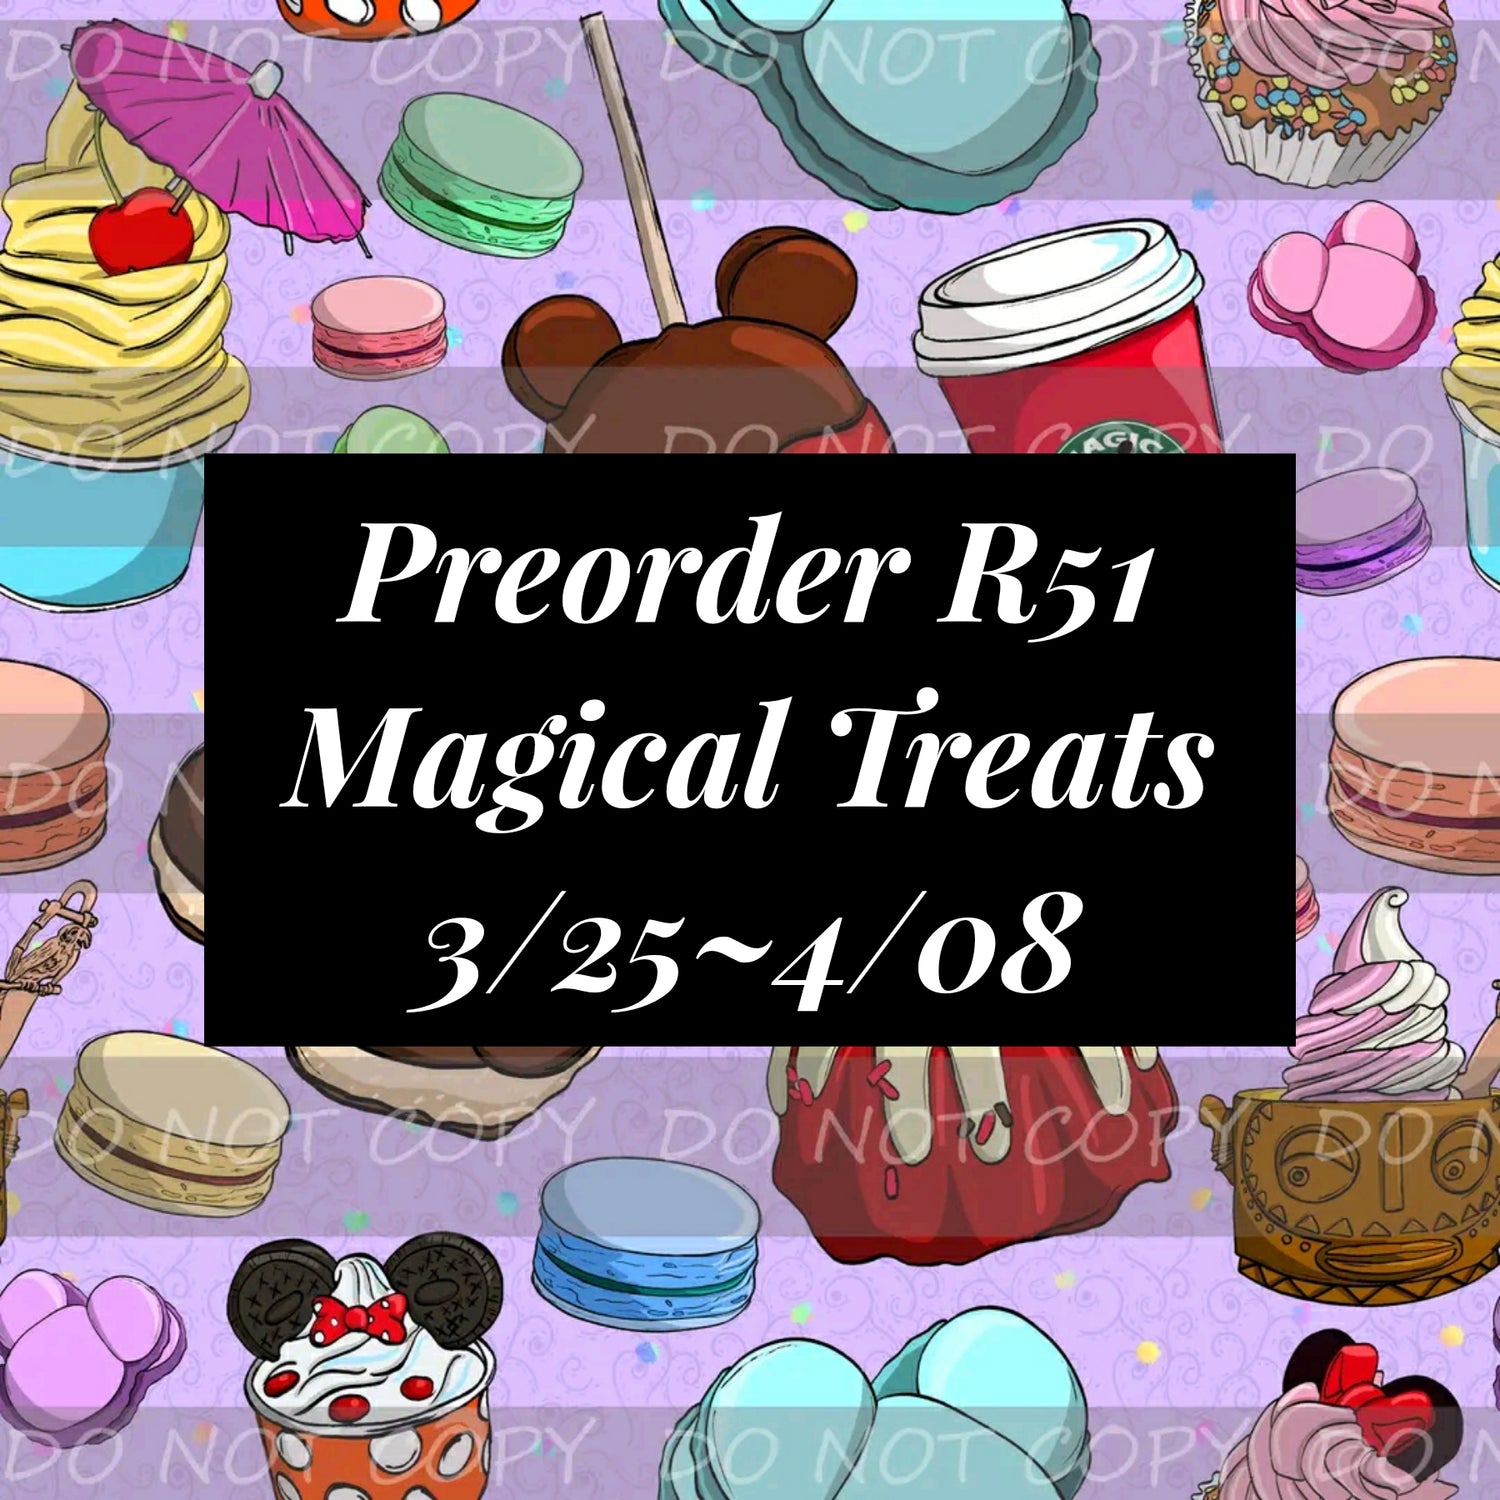 Preorder R51 Magical Treats